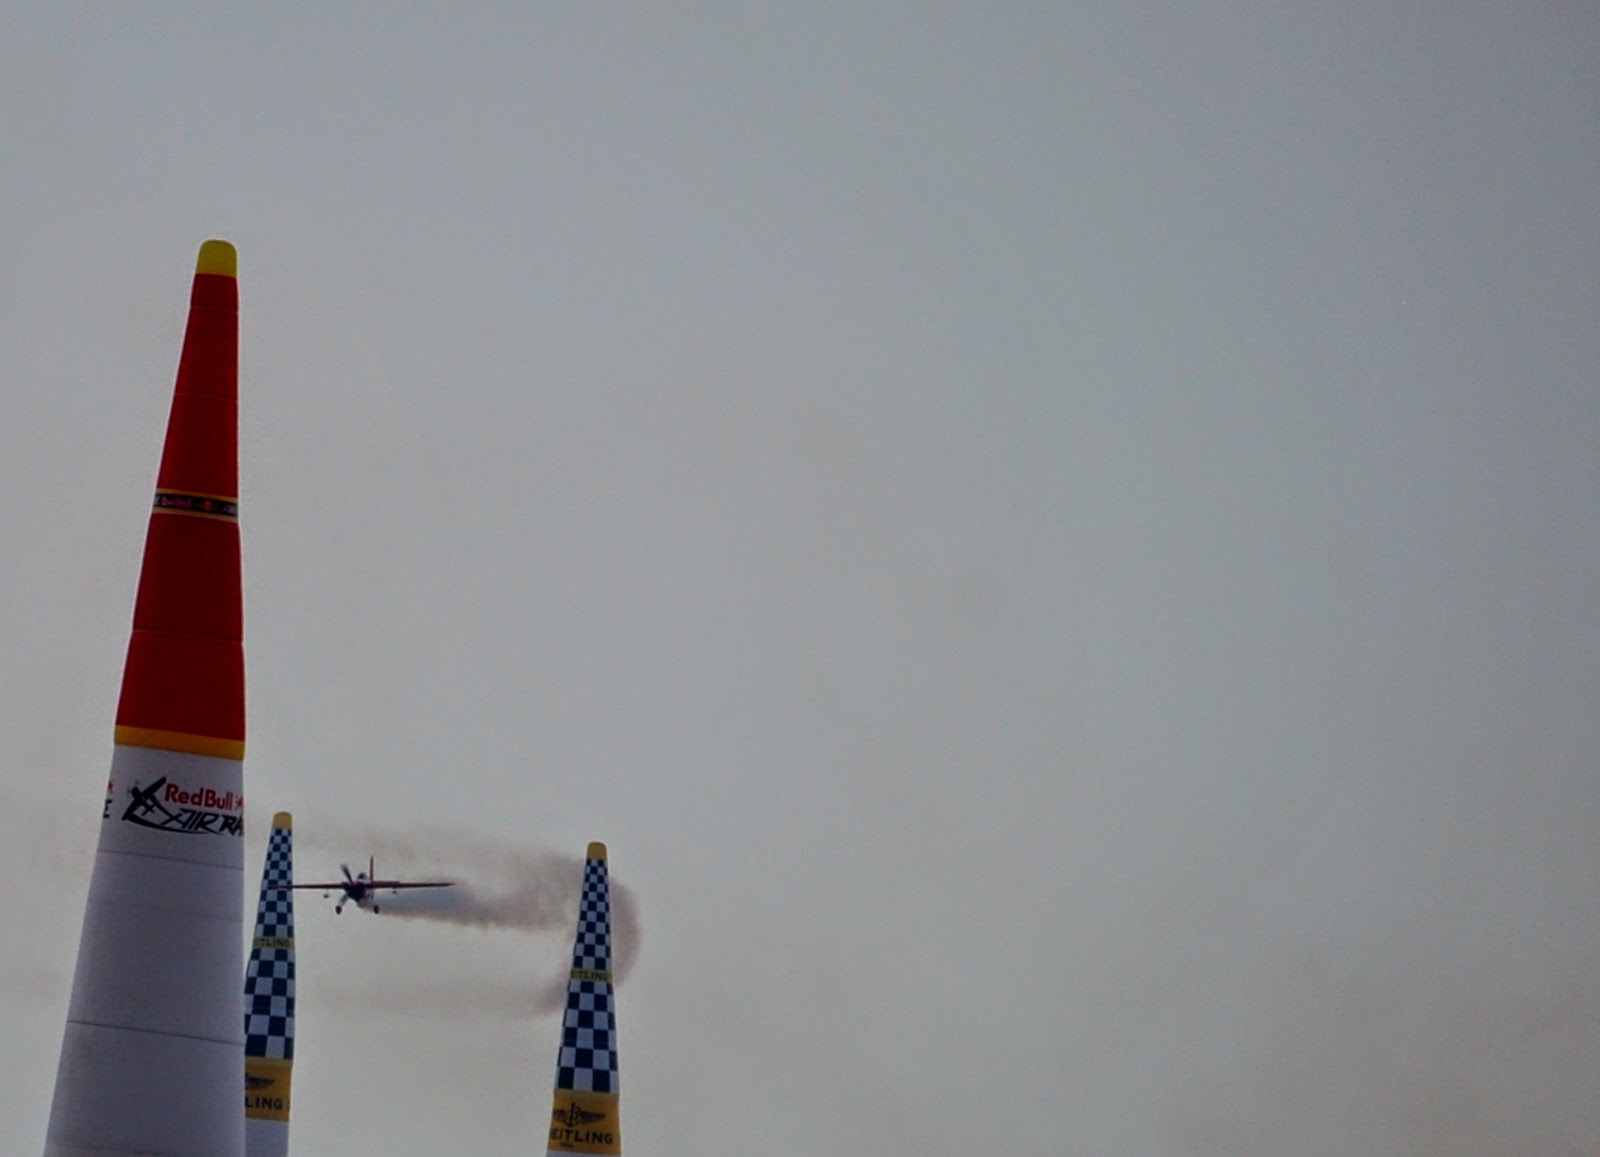 Red Bull Air Race Gdynia